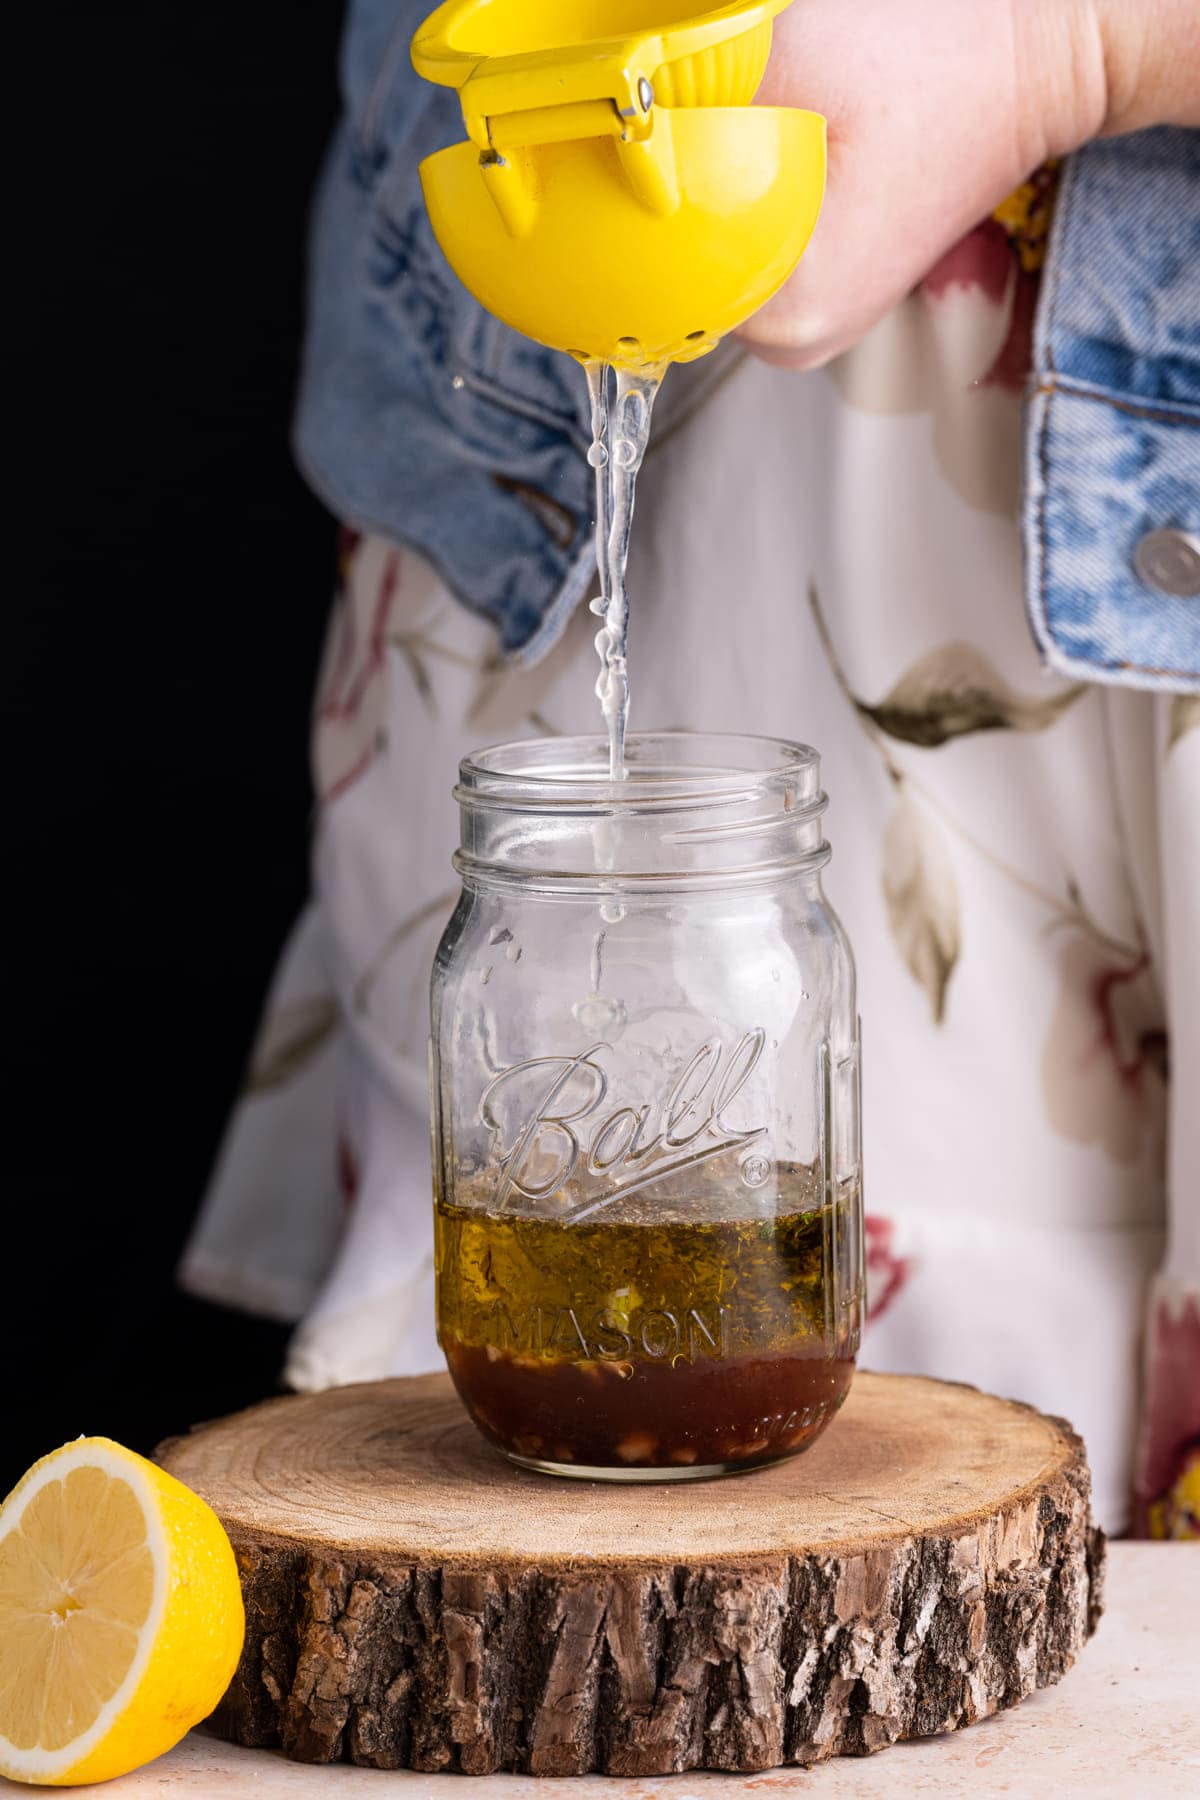 Adding fresh lemon juice to homemade dressing